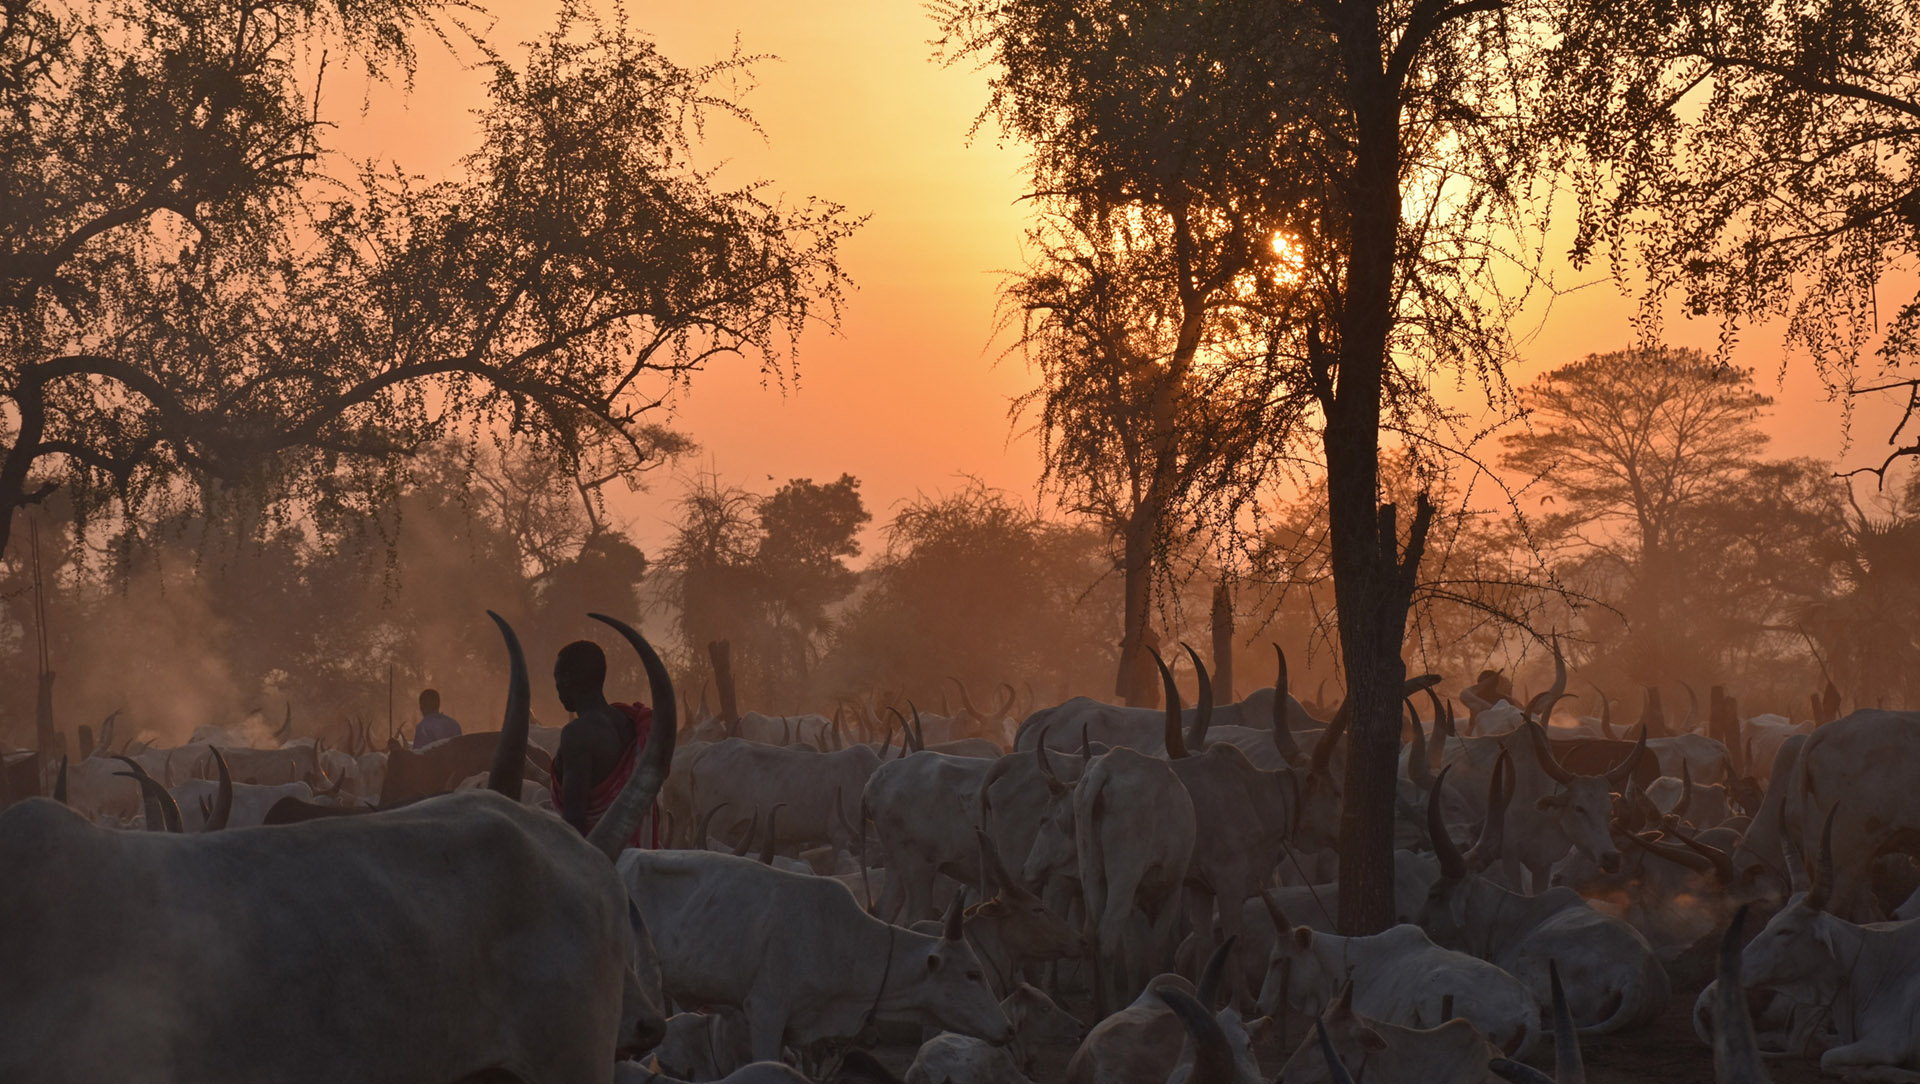 Mundari Tribe Tending to Cattle in South Sudan at Sunset